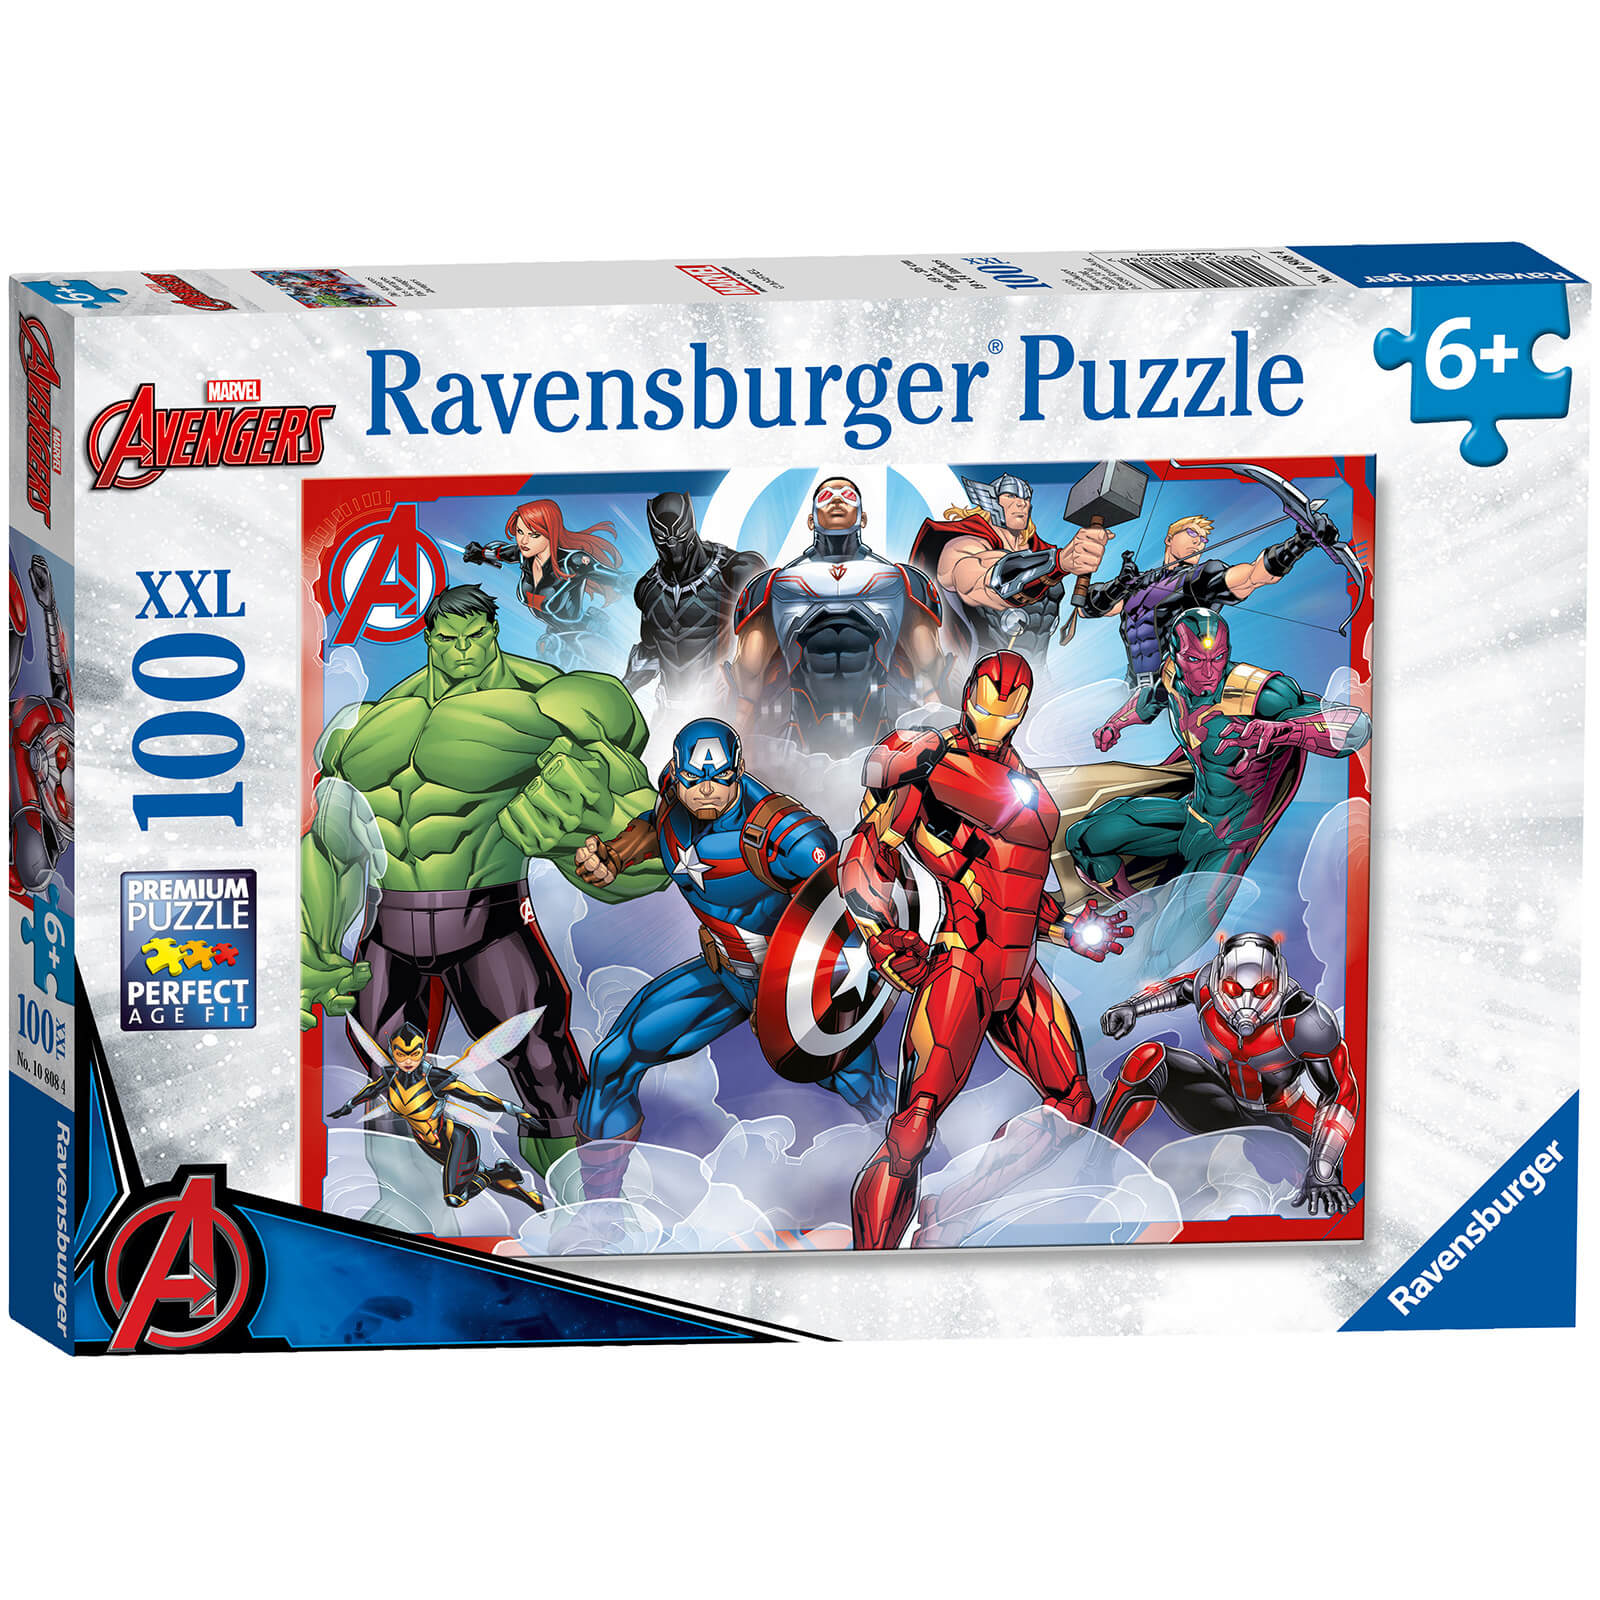 Ravensburger Marvel Avengers XXL 100 piece Jigsaw Puzzle